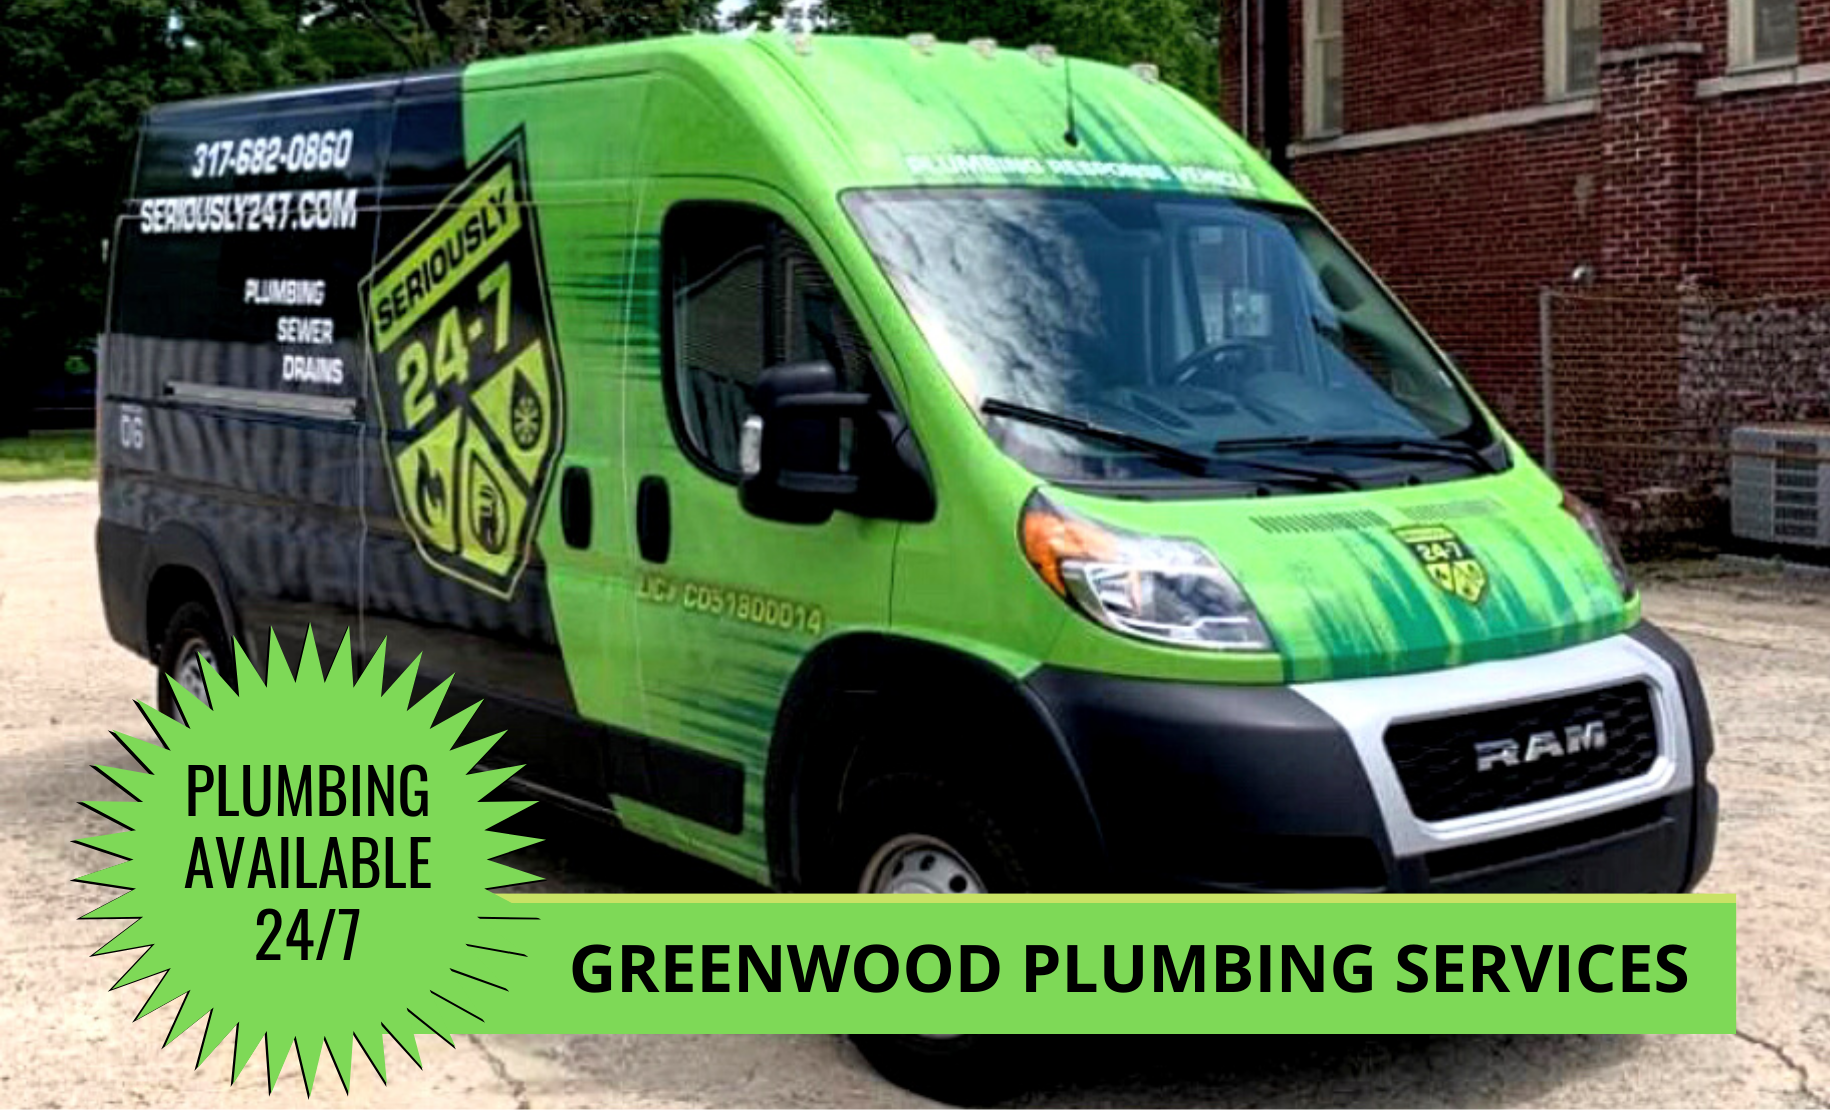 Greenwood Plumbing Services